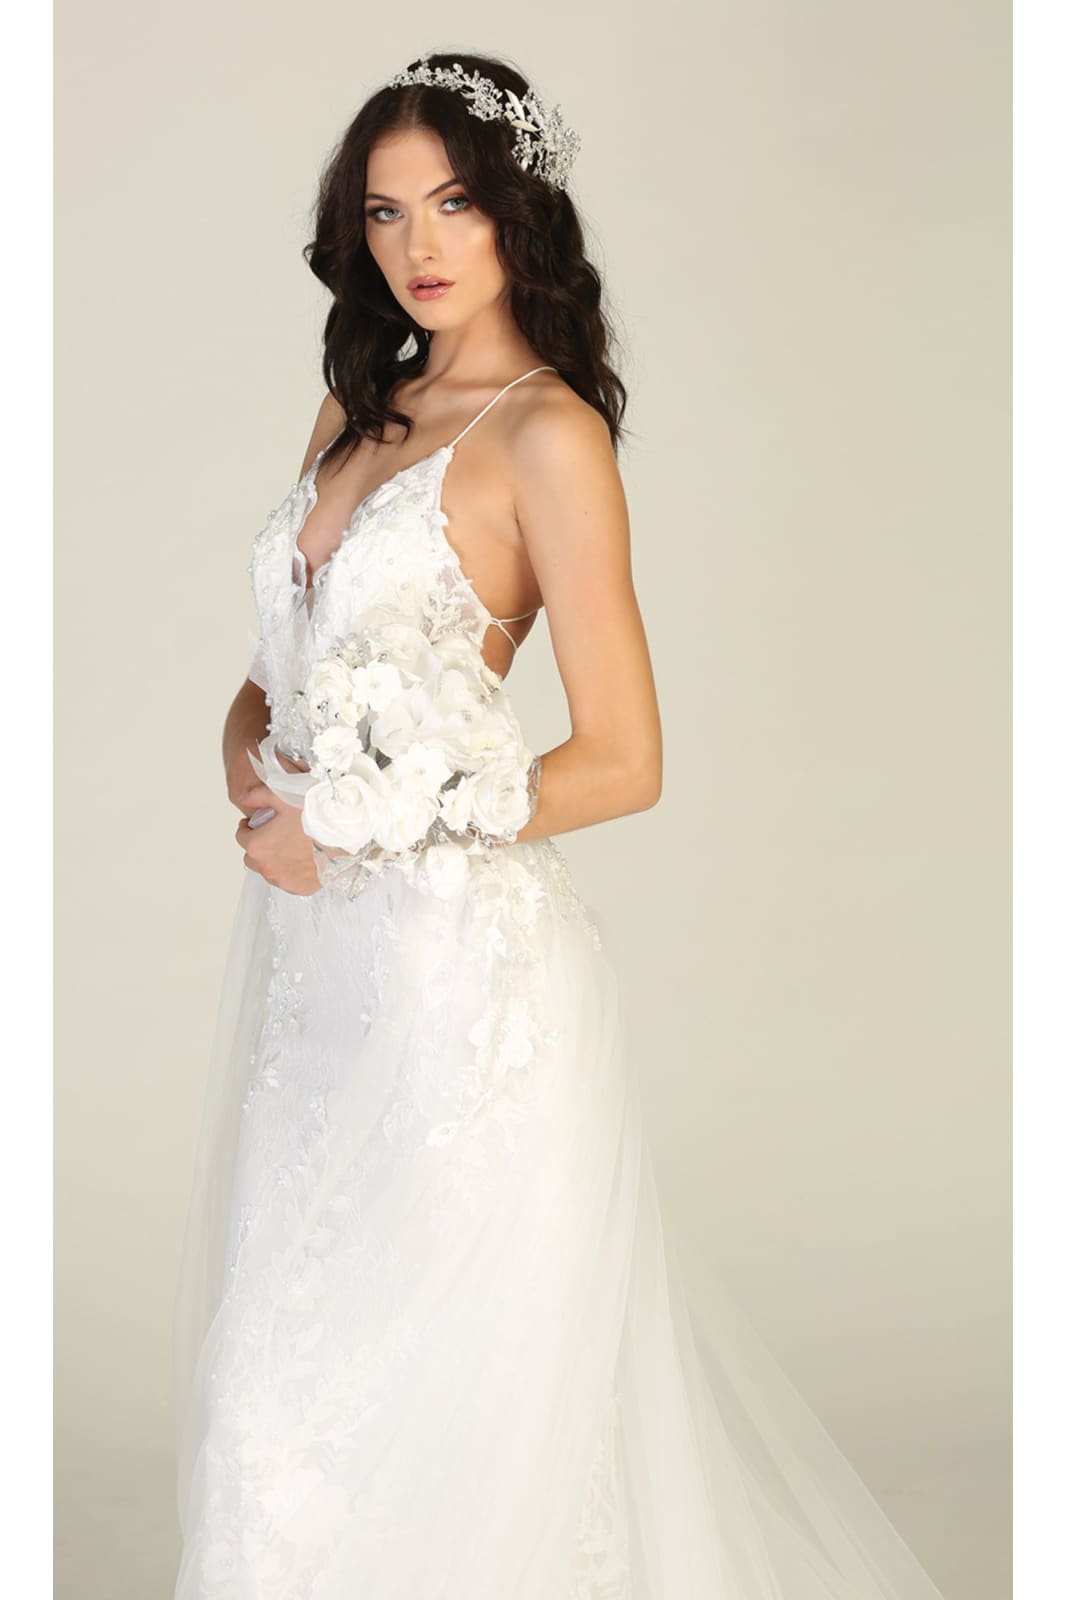 Strappy Bridal Evening Gown with Detachable Train - LA7823B 